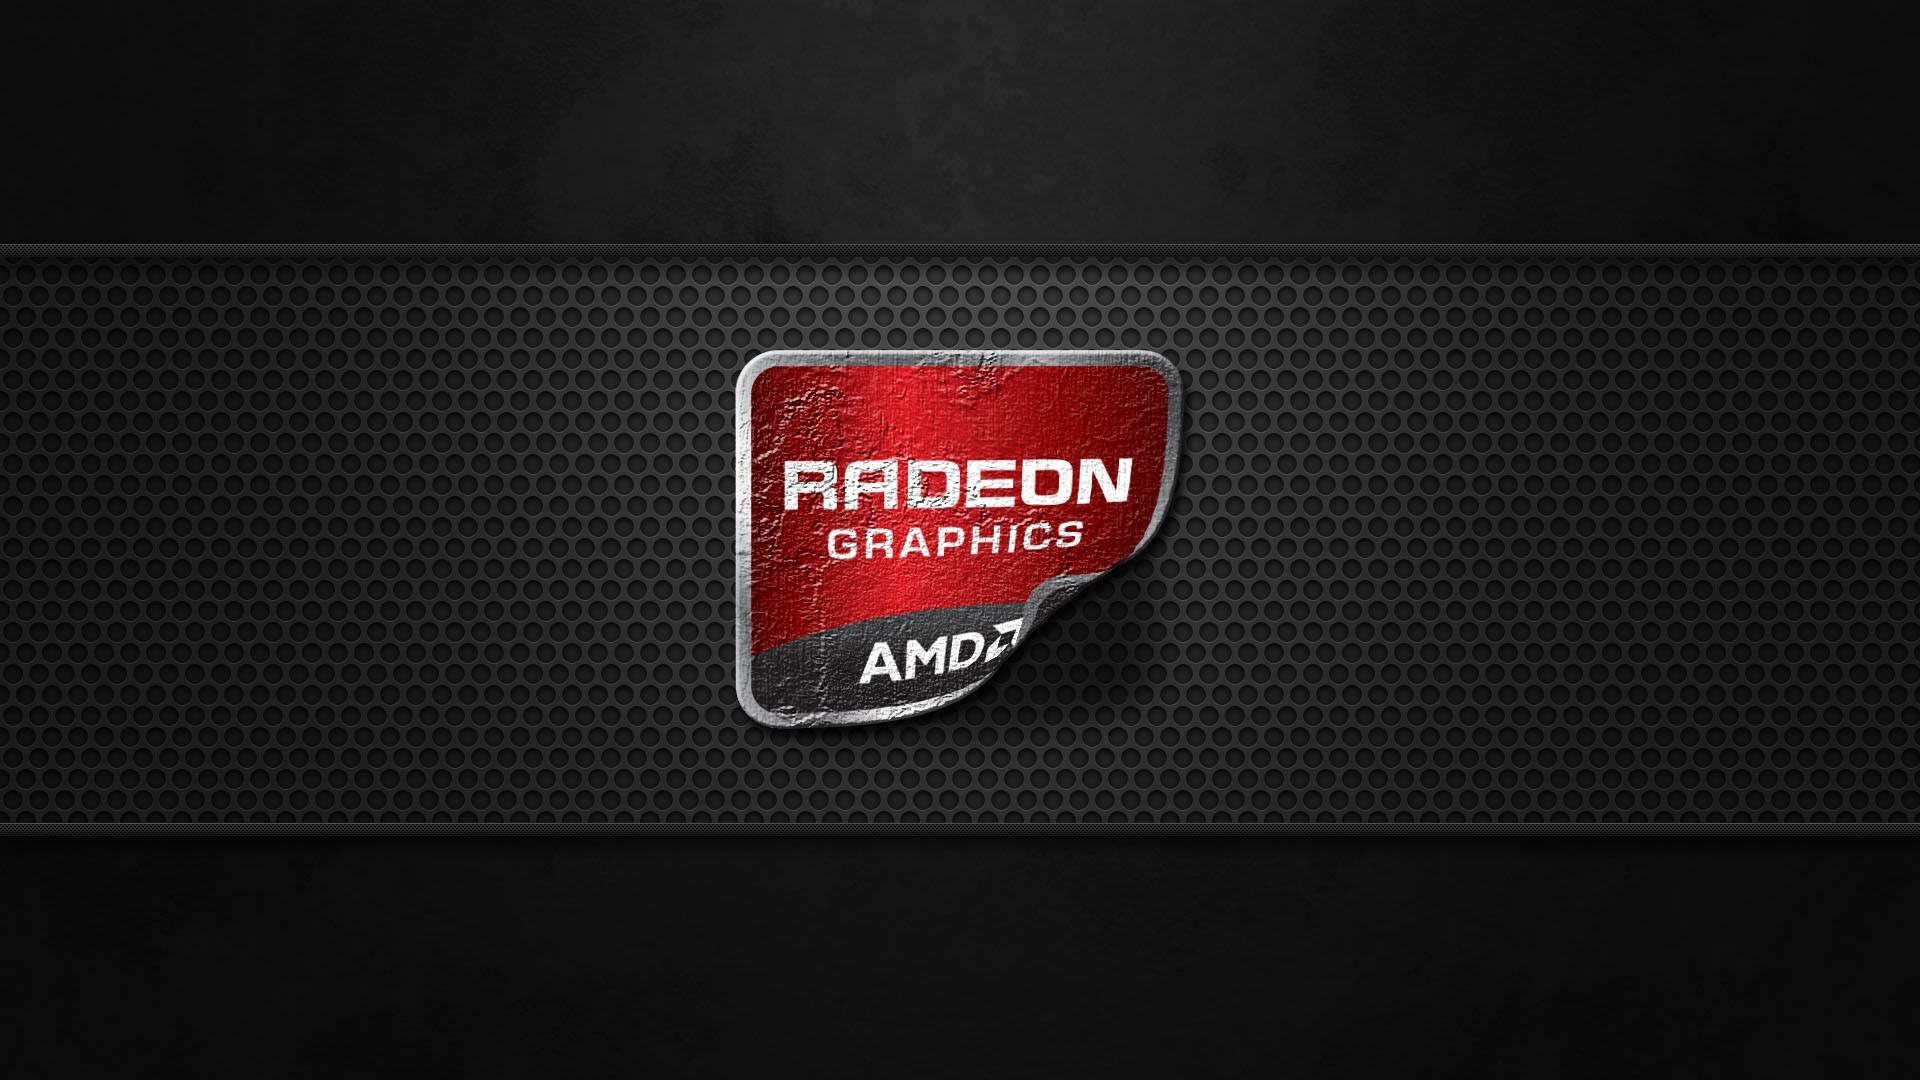 AMD: لطف به Pc داران، با 150 دلار صاحب گرافیکی قوی‌تر از کنسول ها شوید!!! 4